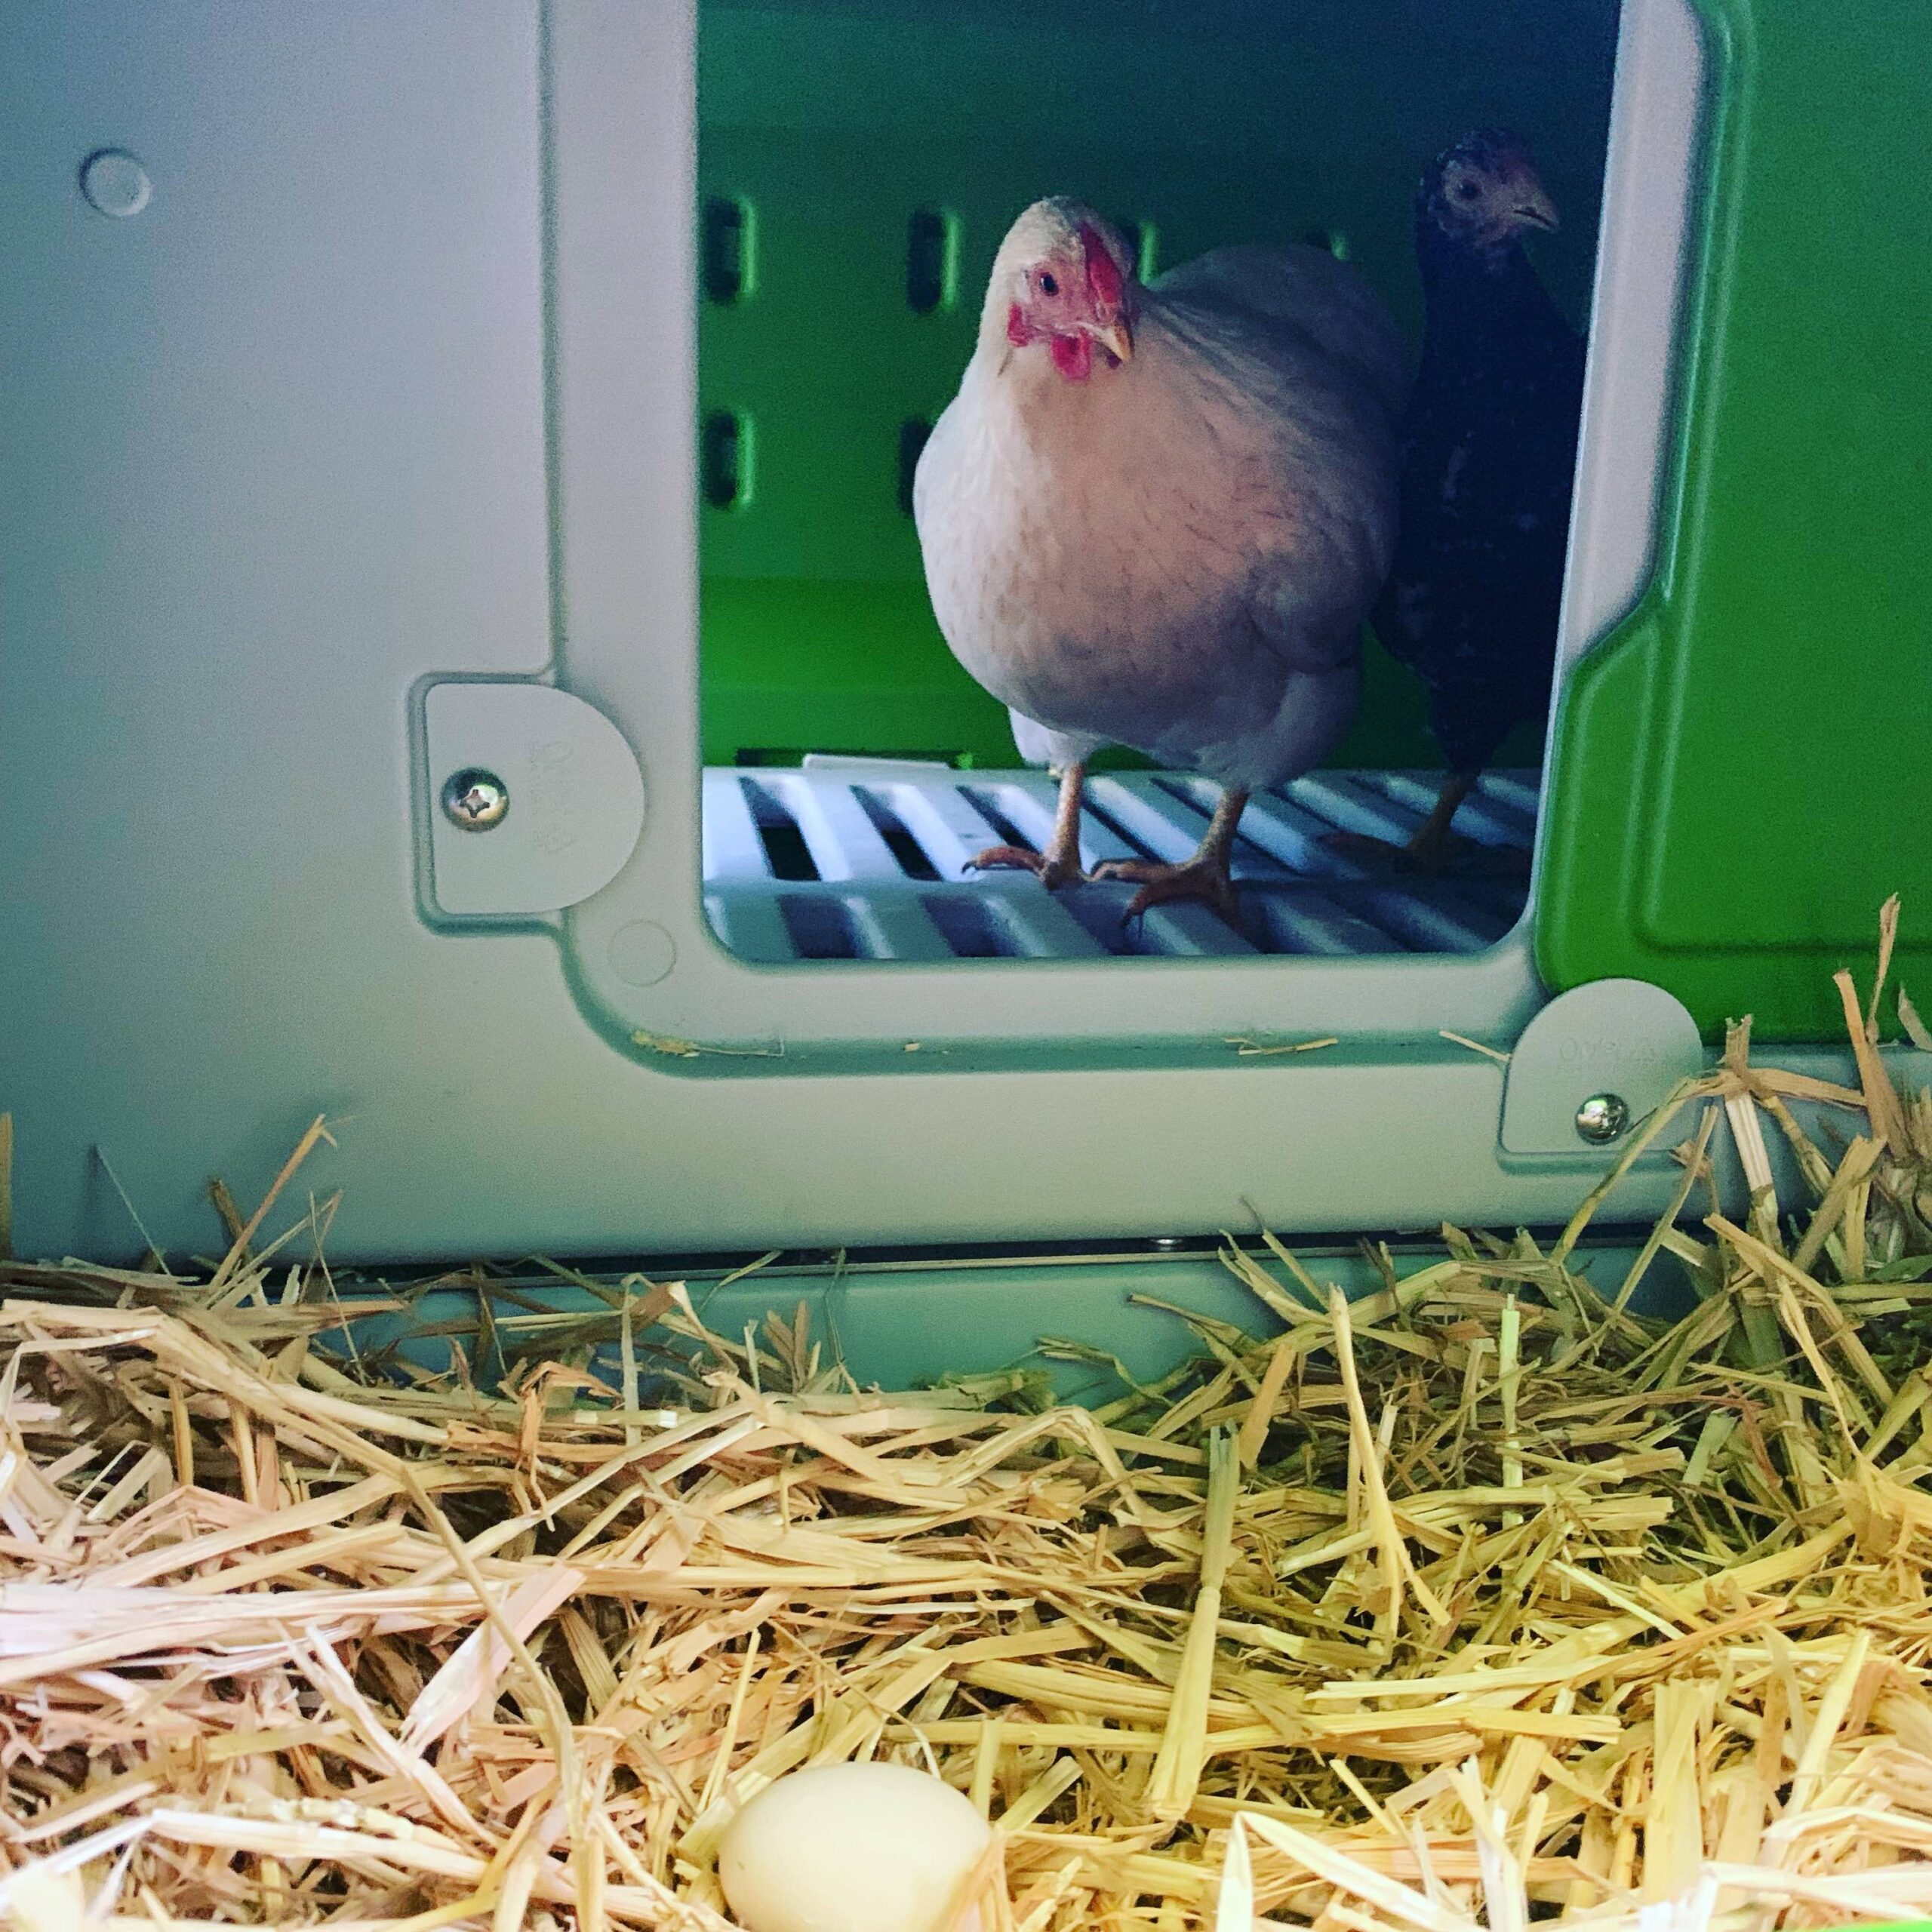 Perché le galline nascondono le uova e come evitarlo - Omlet Blog Italy